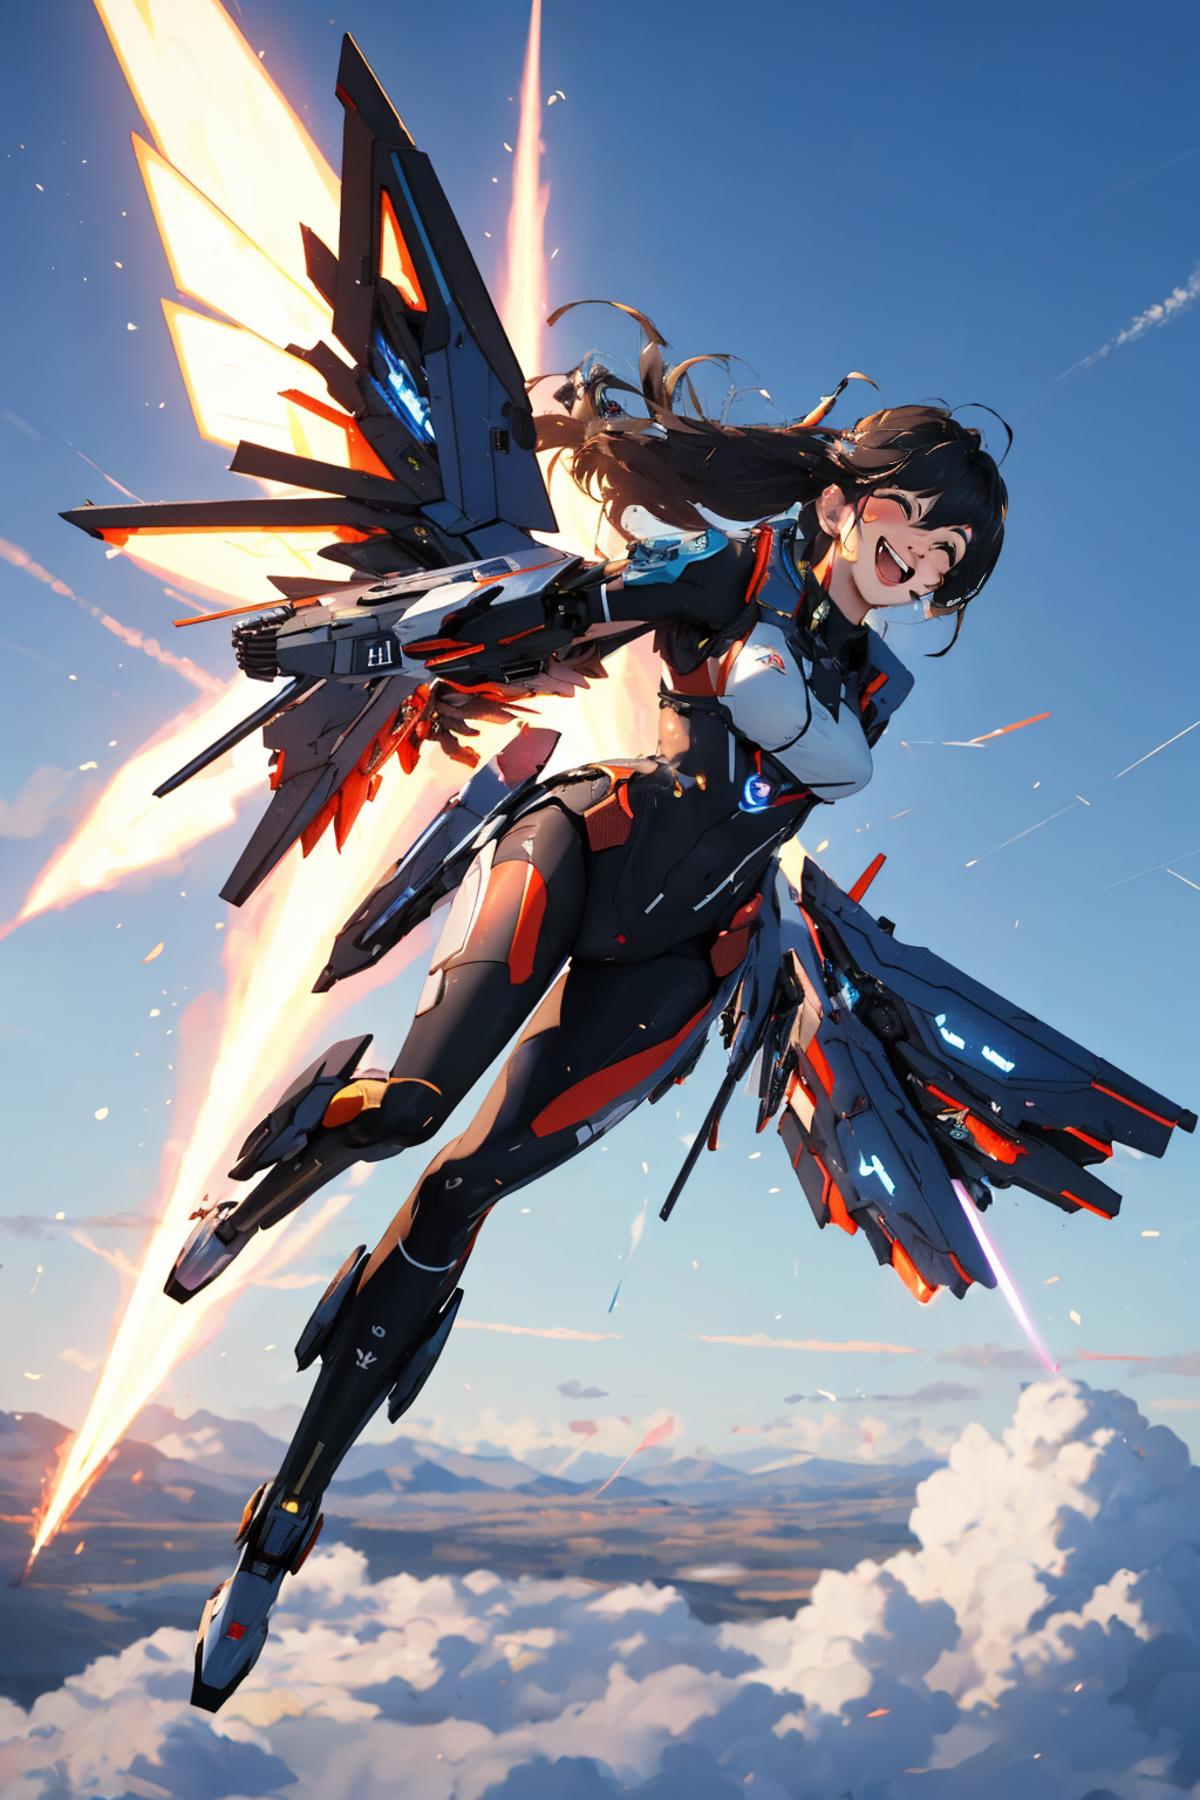 LottaLewds' mechanical_wings image by Mikalichou